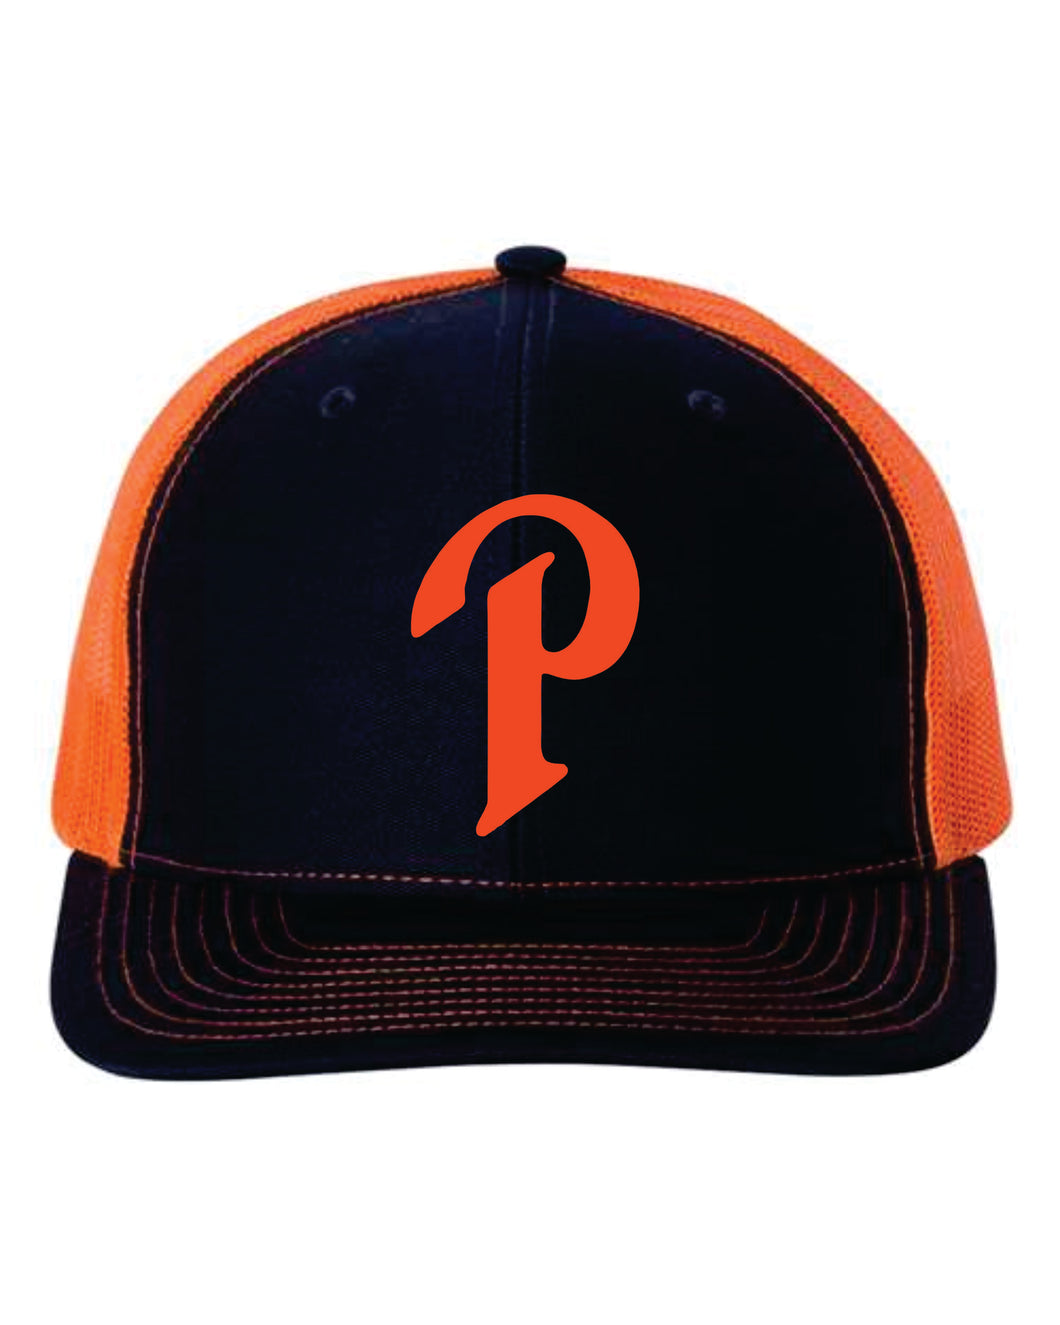 Padres Snapback Hat